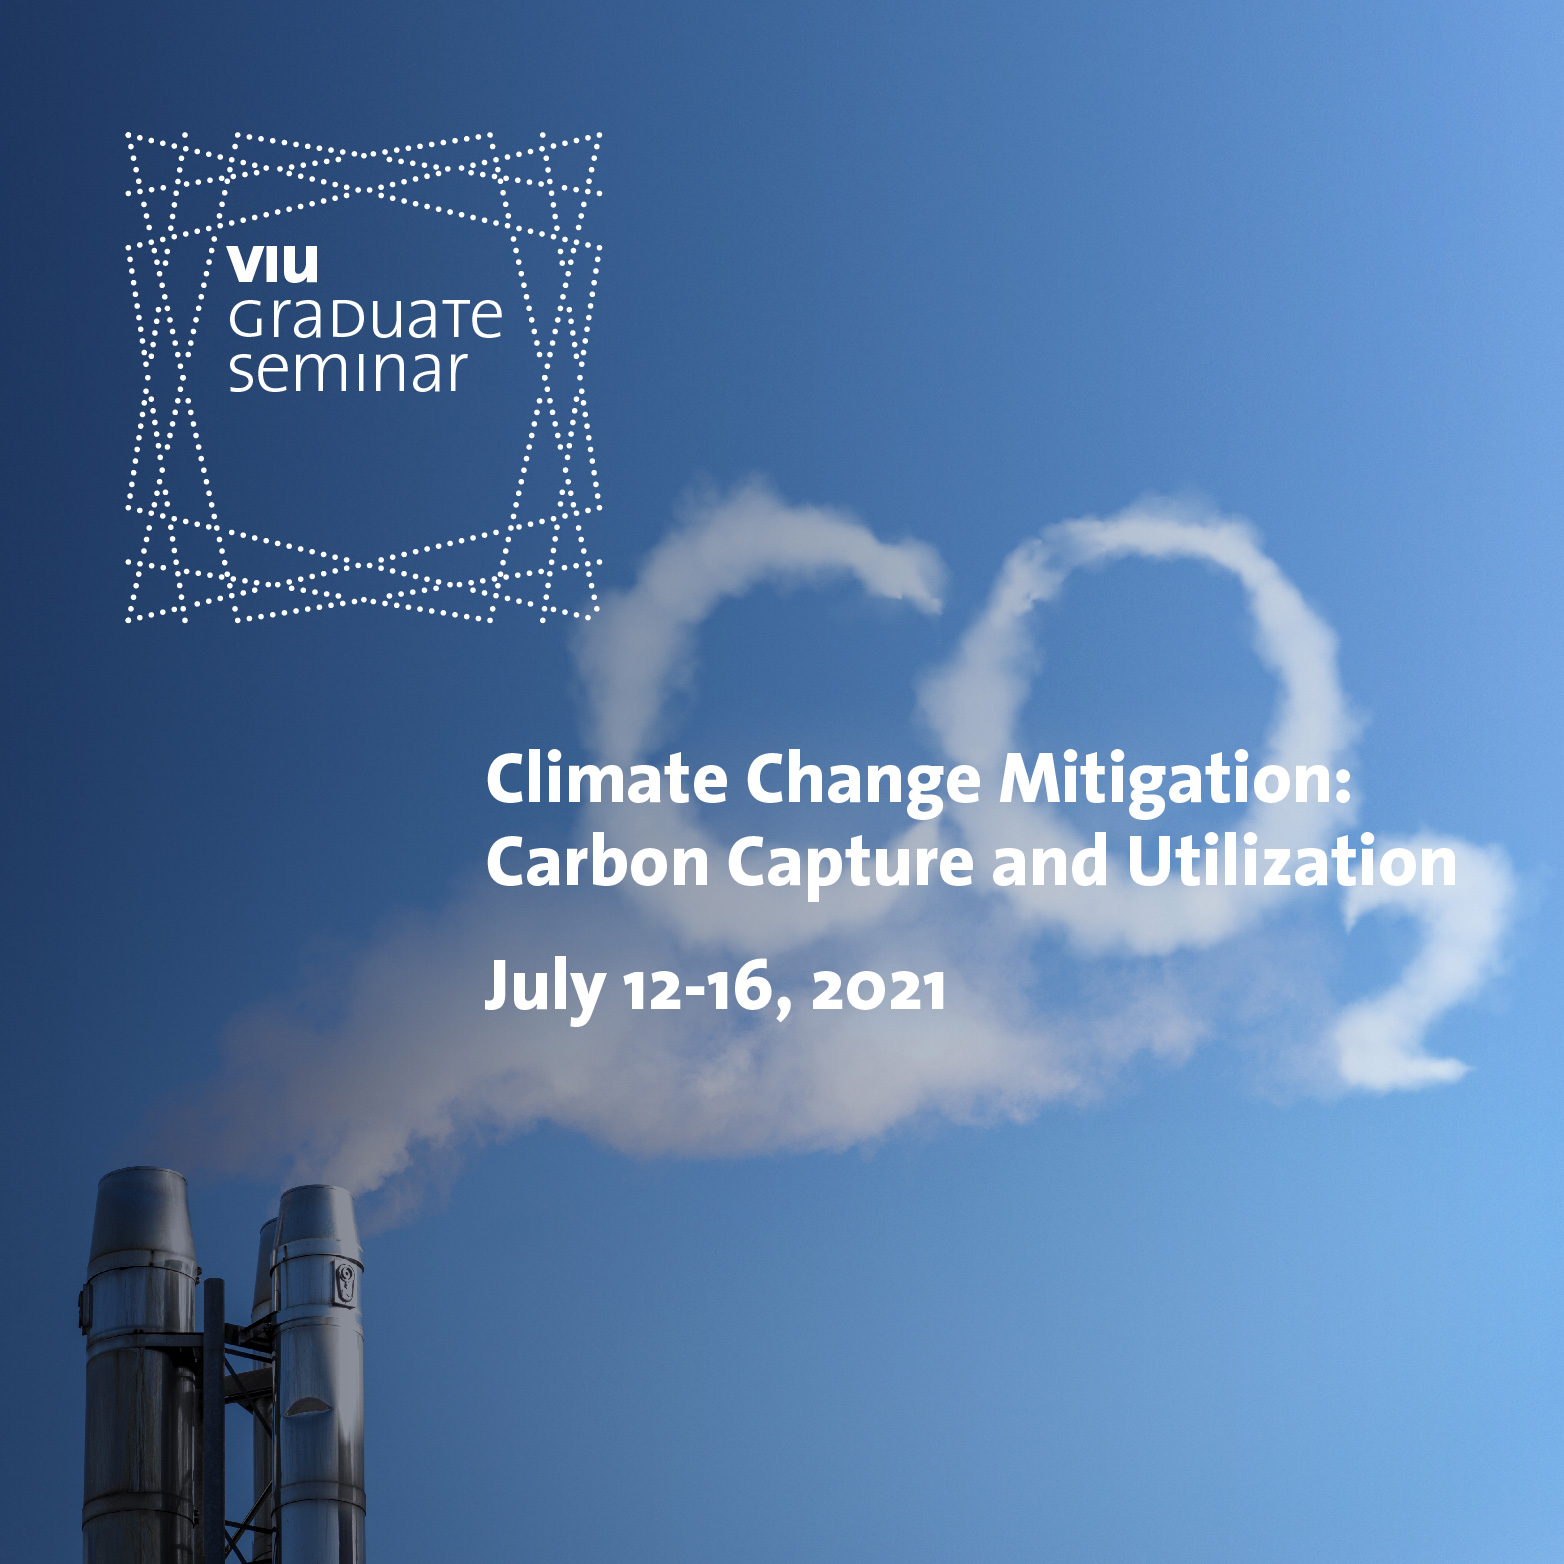 cop VIU Graduate Seminar Climate Change Mitigation 500x454